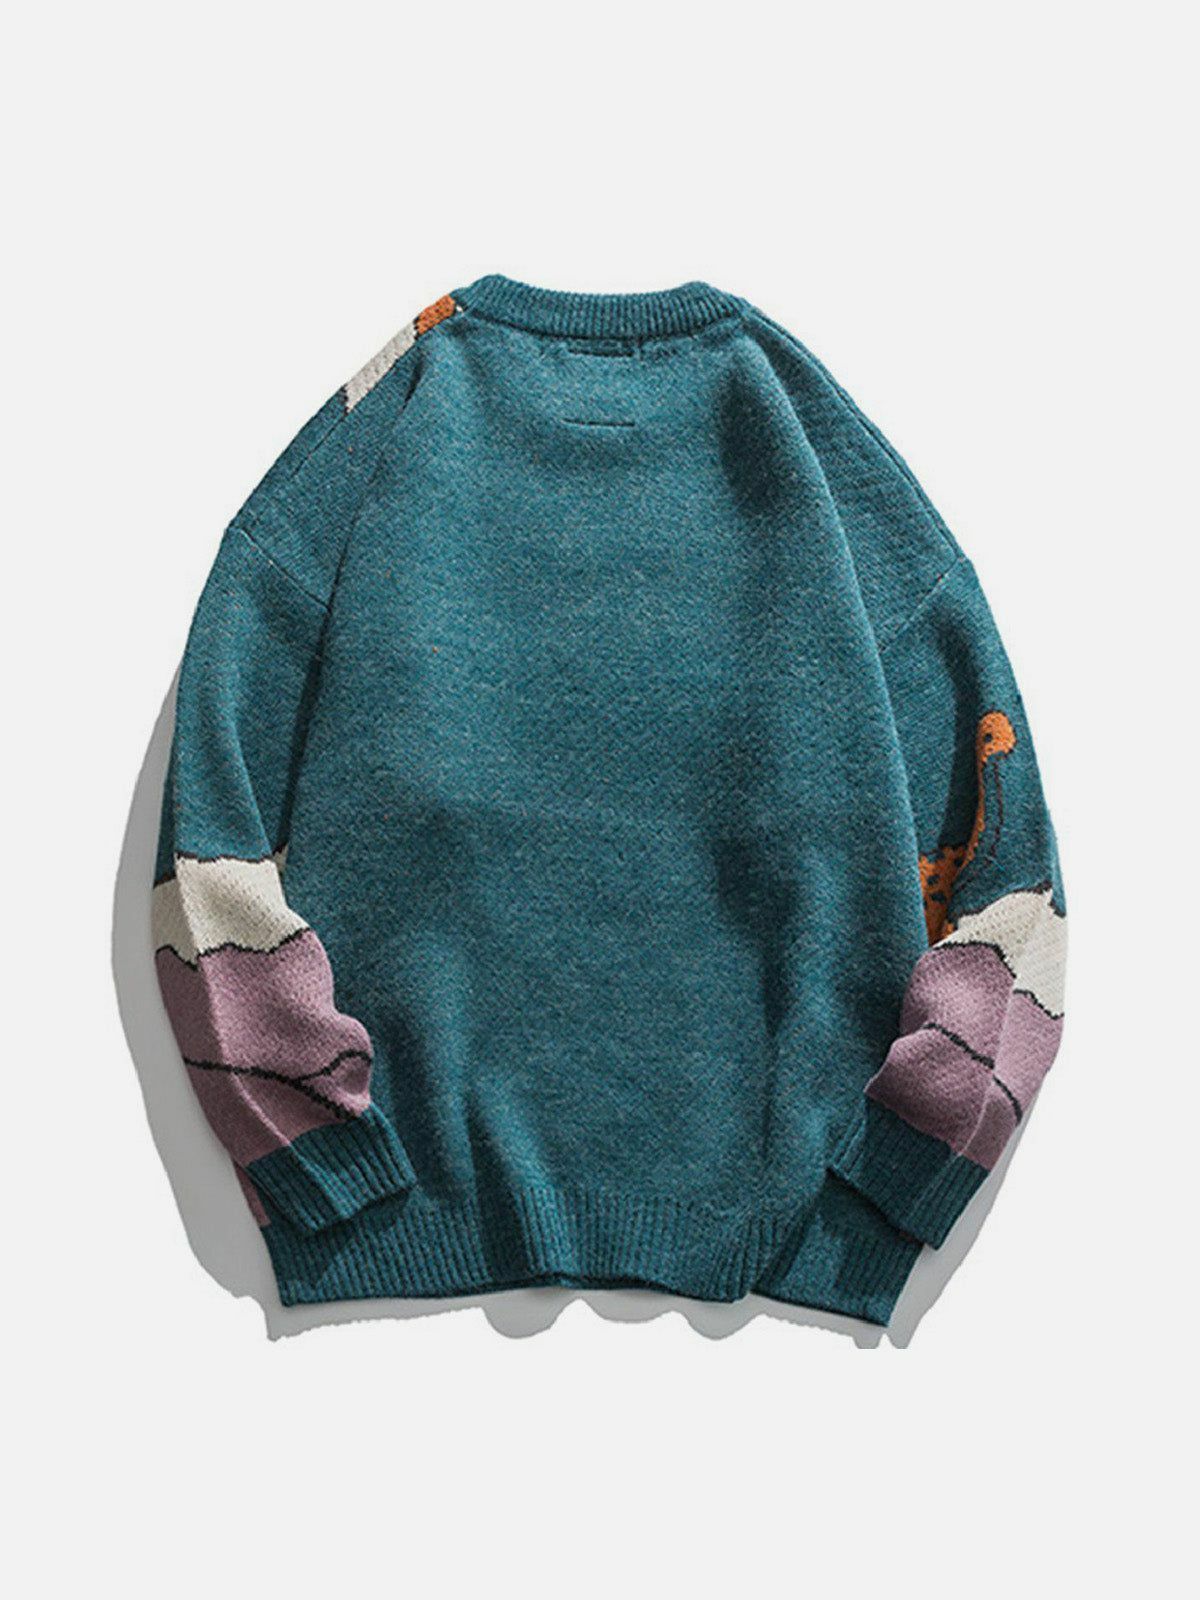 dino print knit sweater quirky & retro streetwear charm 7059